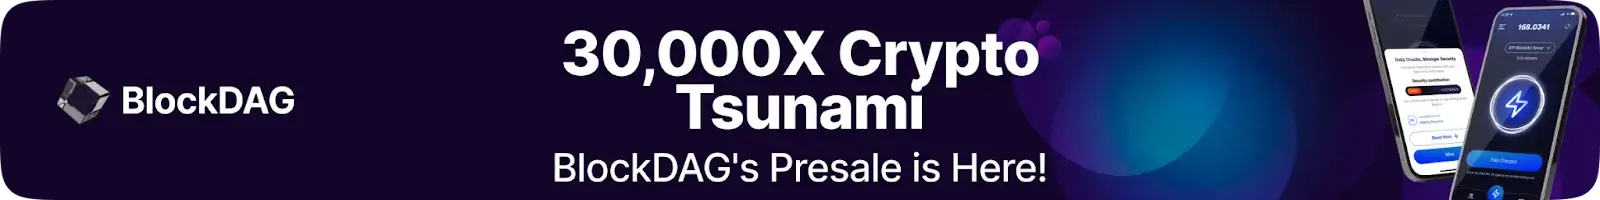 30,000X Crypto Tsunami